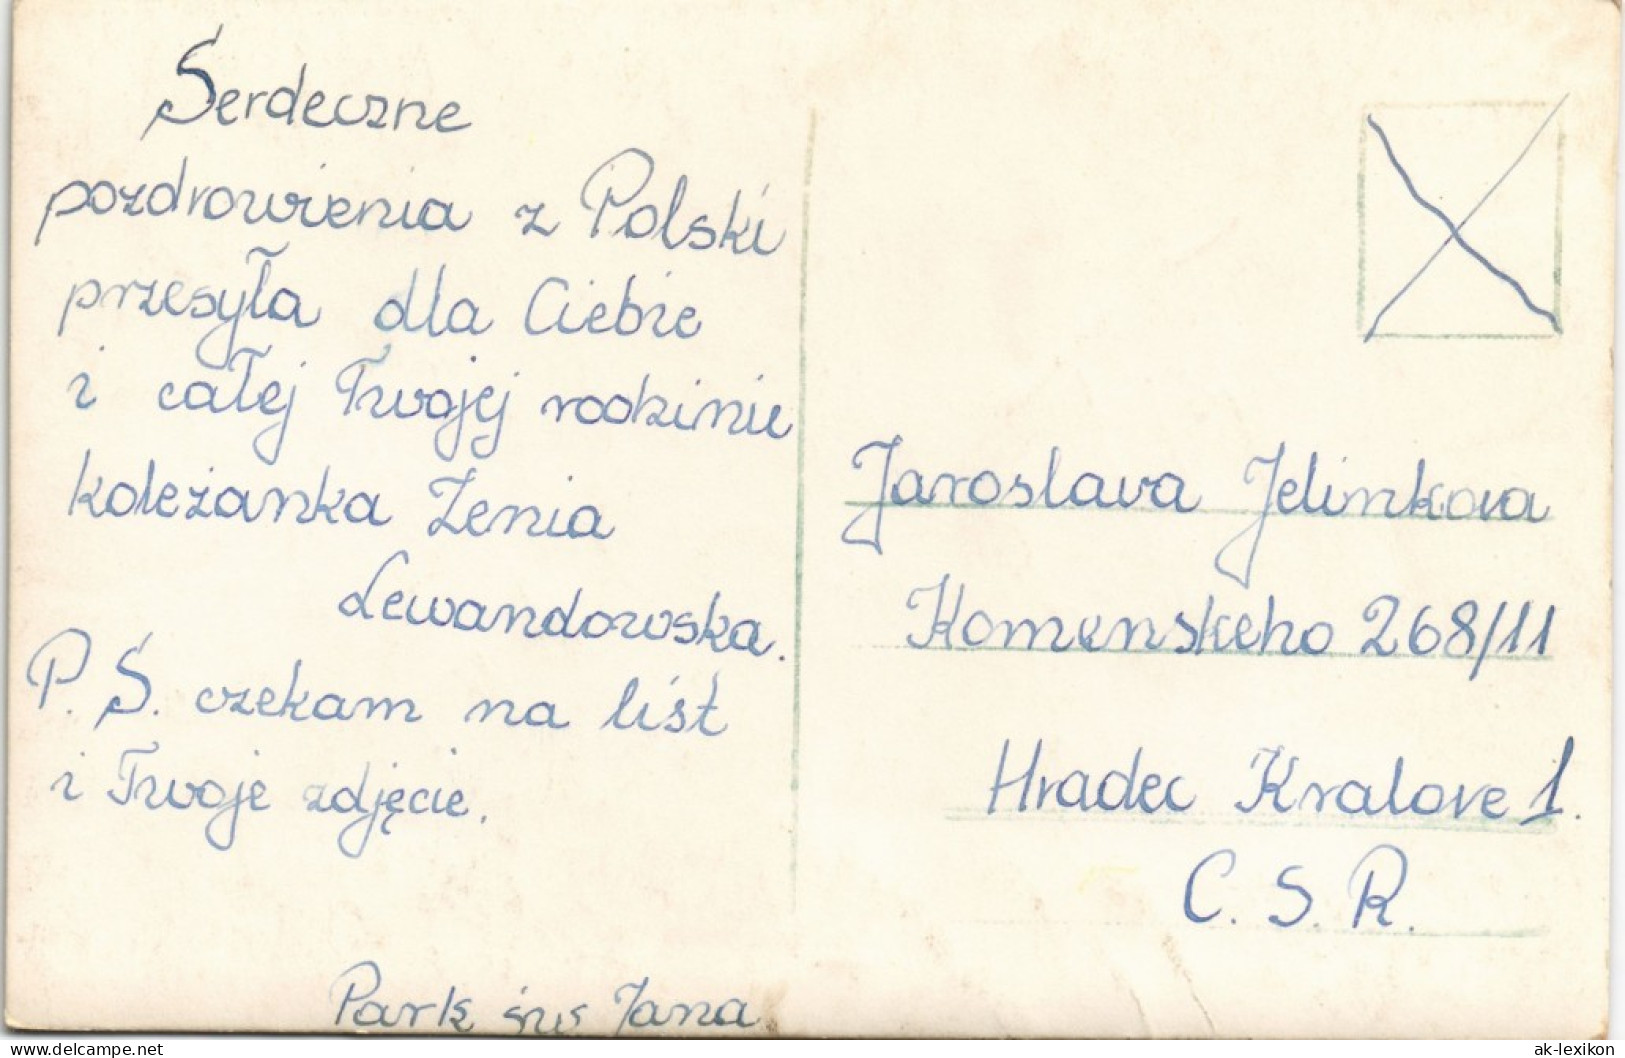 Postcard Polen Polska Polen Polska Parkanlage 1961 - Pologne